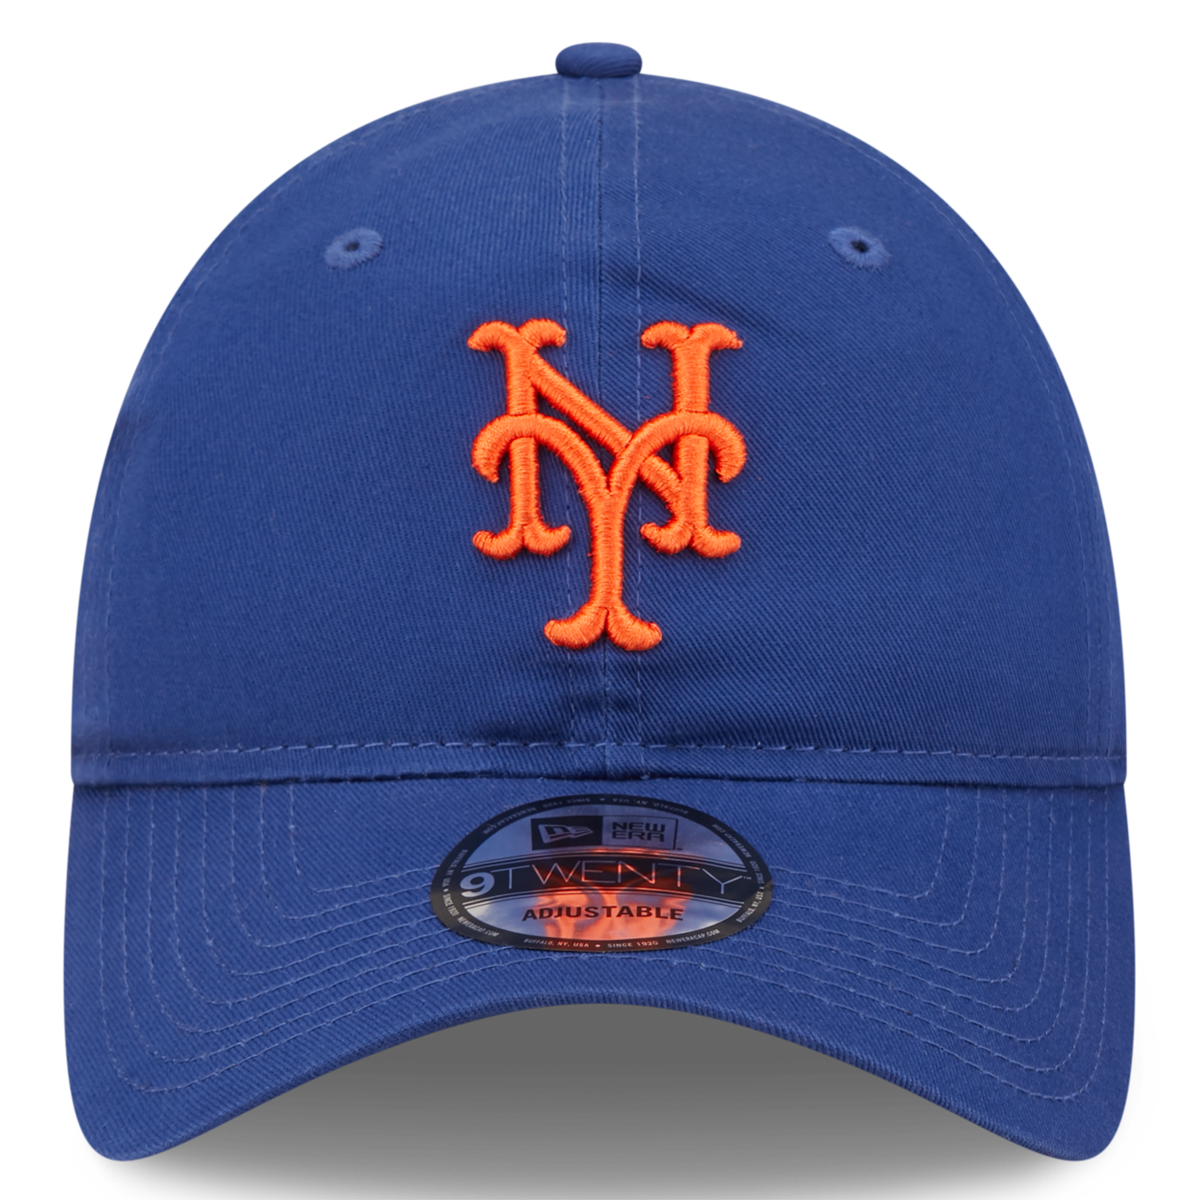 New York Mets 9TWENTY®